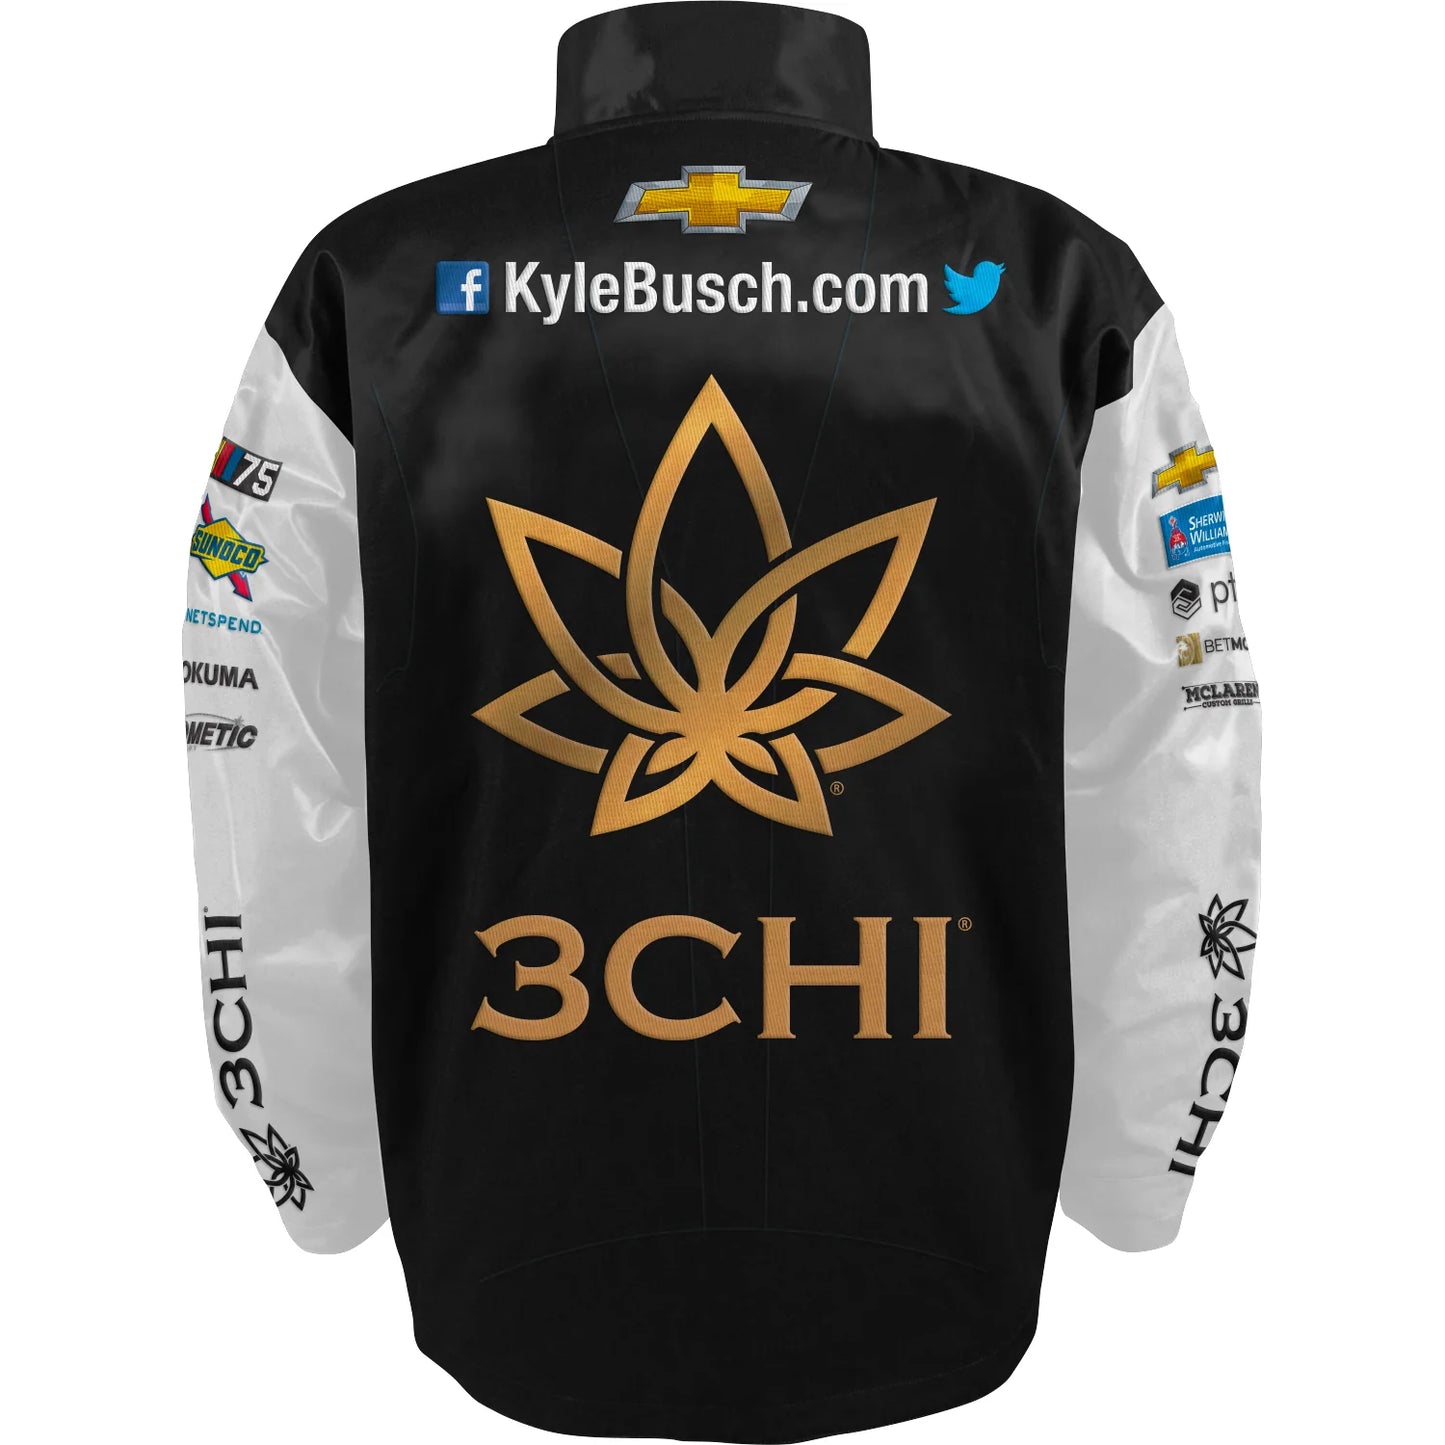 NASCAR Jacke Kyle Busch 3CHI Uniform Jacke Schwarz/Weiß